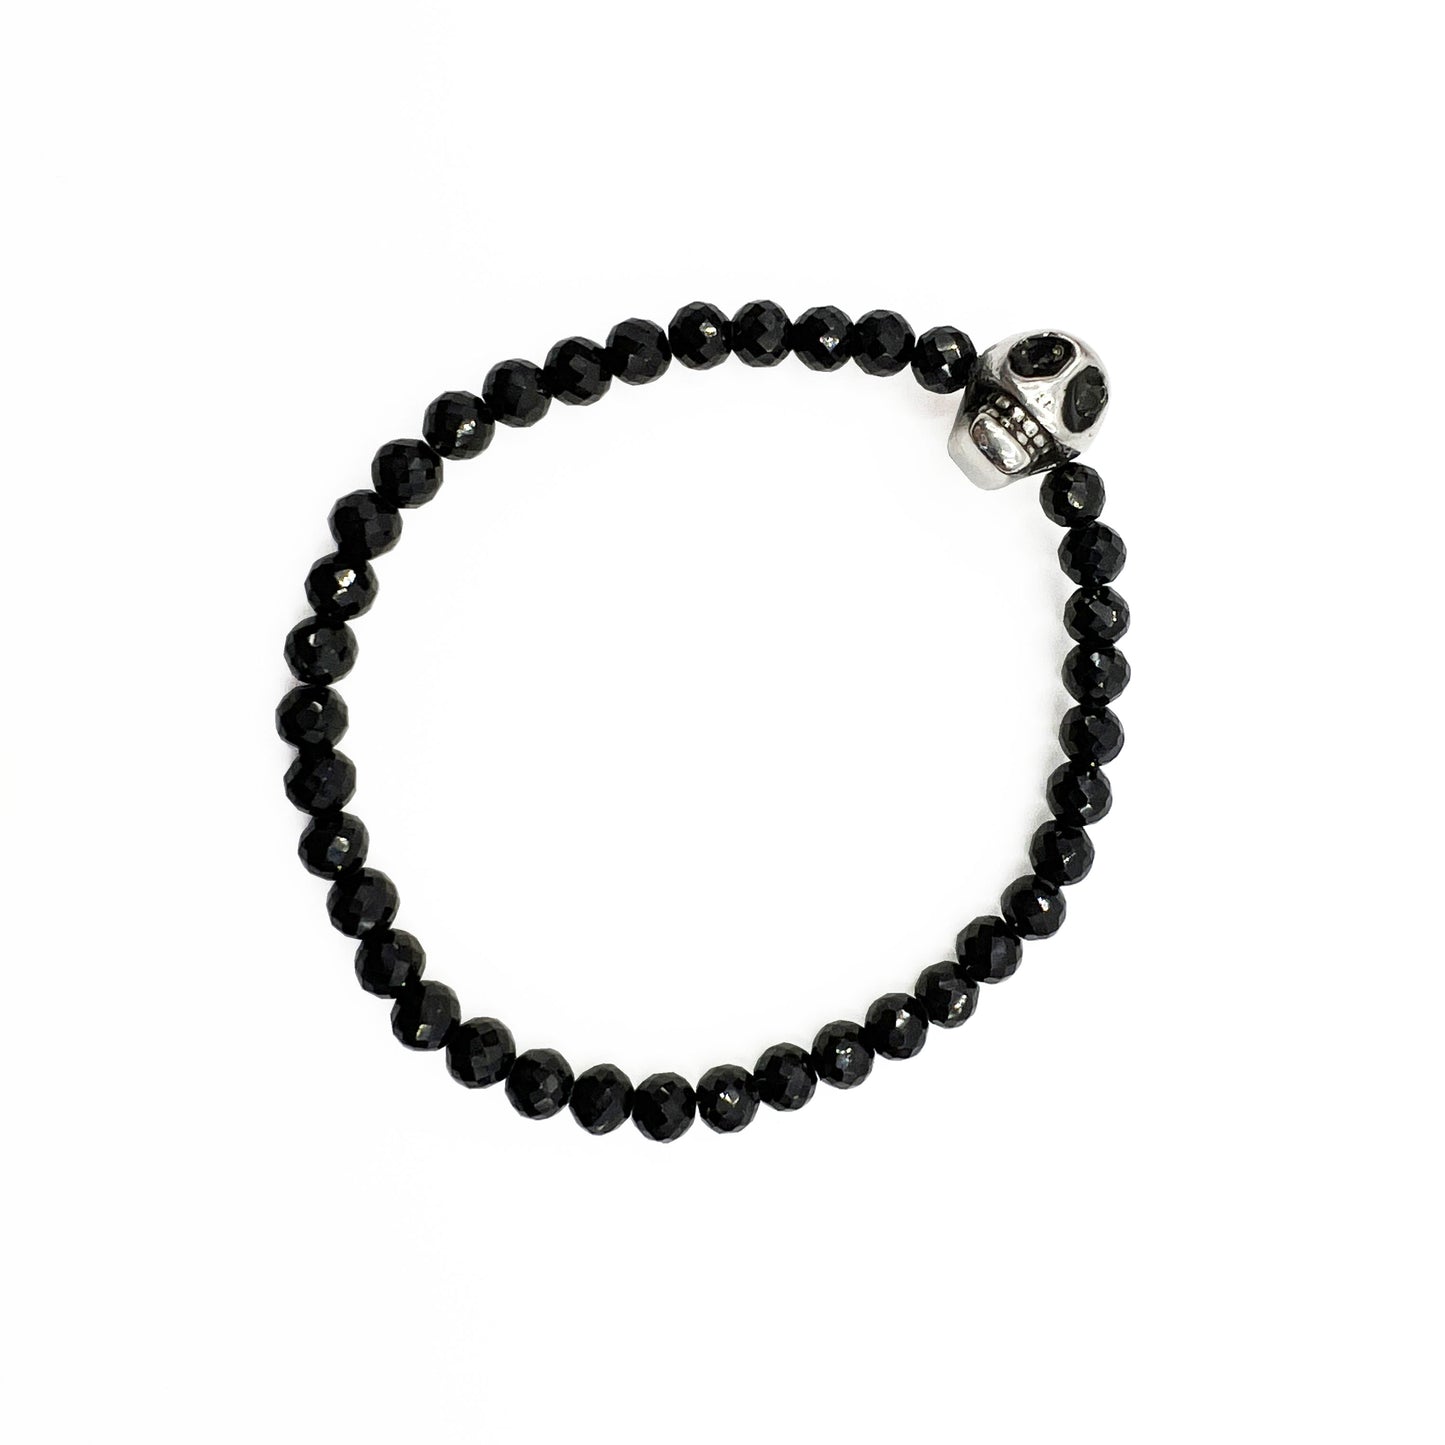 Black spinel beads bracelet with Silver Skull